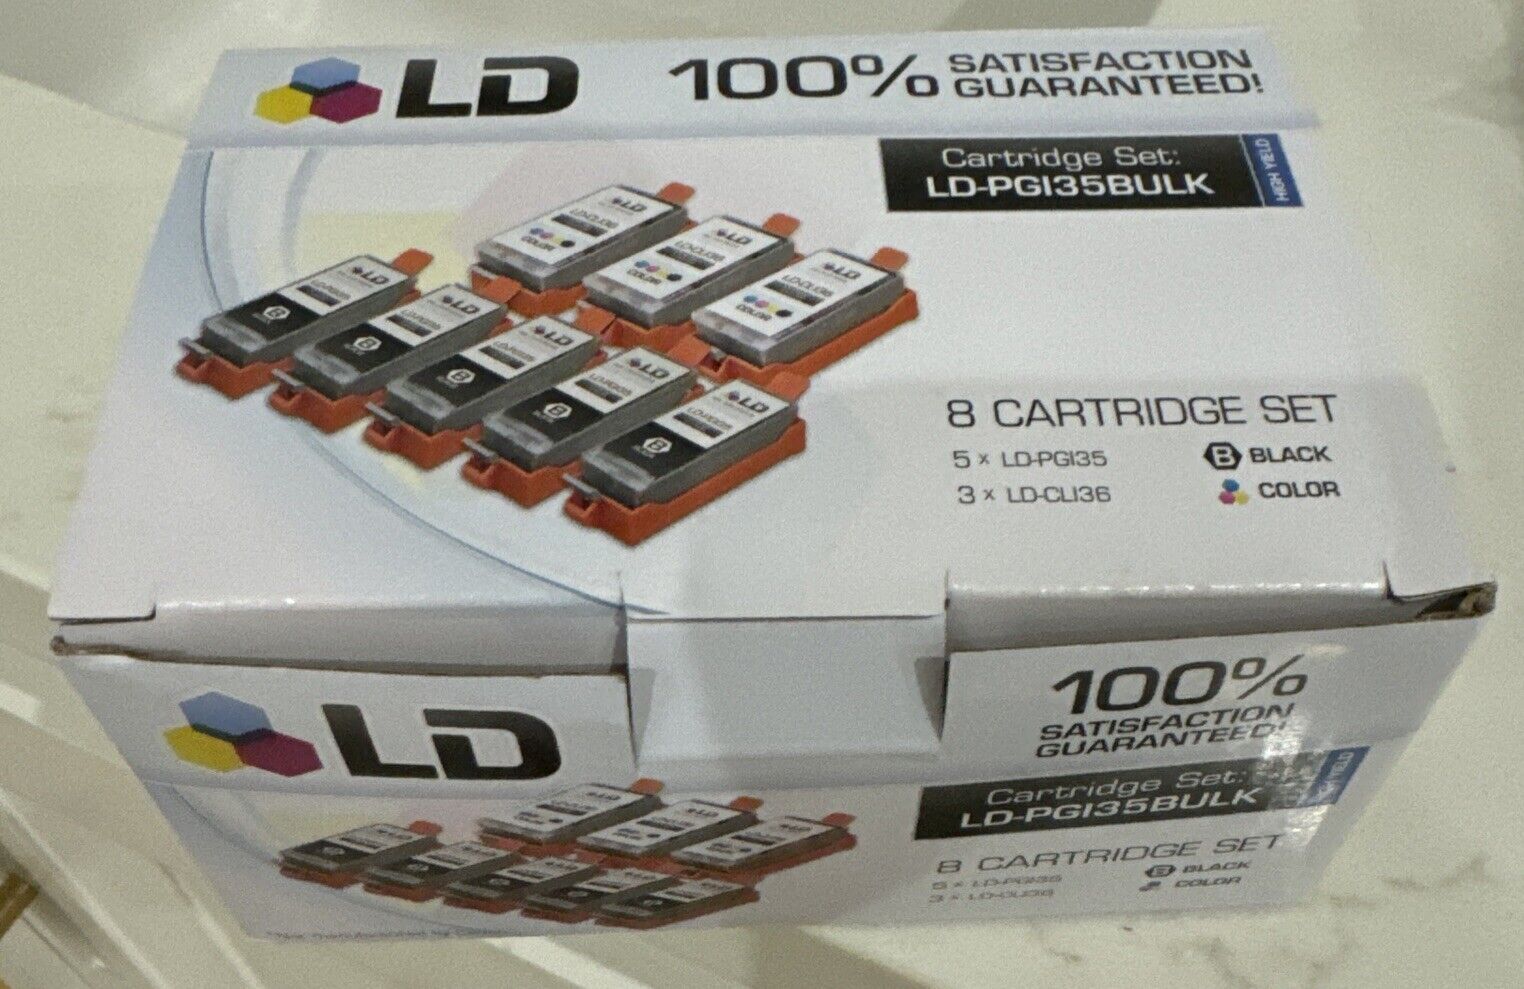 NIB: LD-PGI35BULK High Yield Ink Cartridge Set Of 8- 5 Black X 3 Color(LD-CLI36)